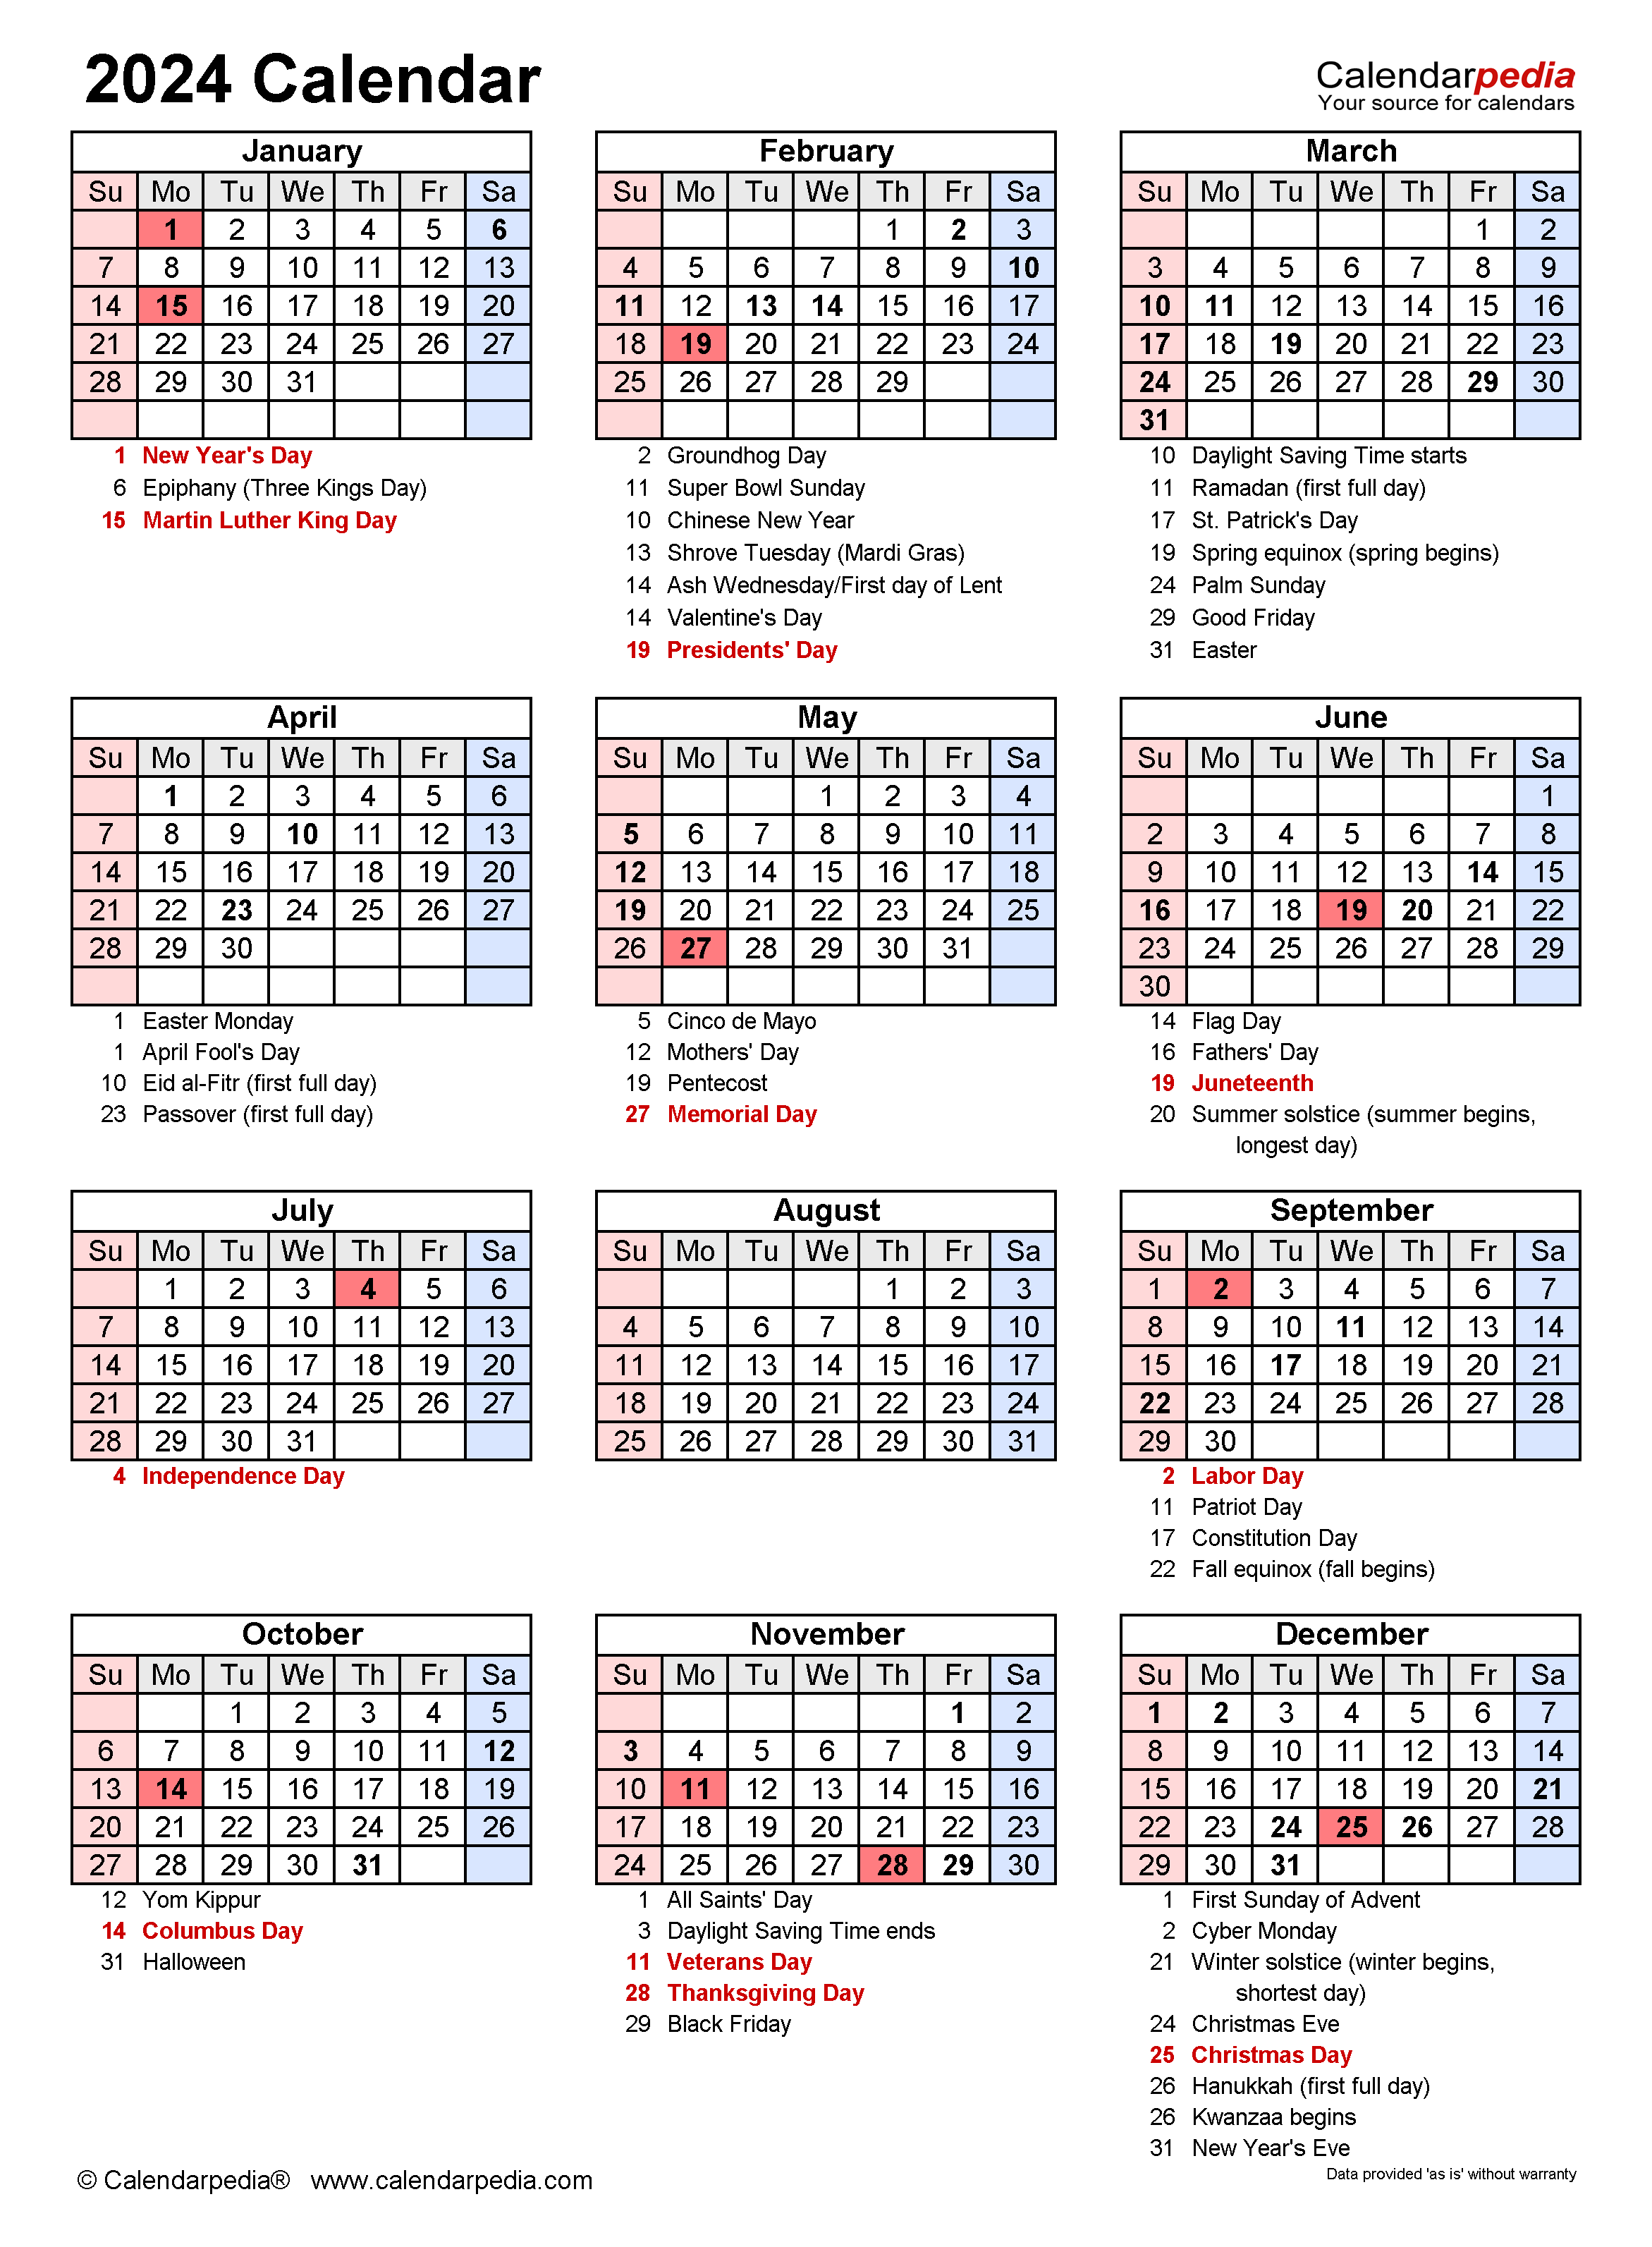 2024 Calendar Free Printable PDF Templates Calendarpedia - Free Printable 2024 Calendar With Holidays Time And Date